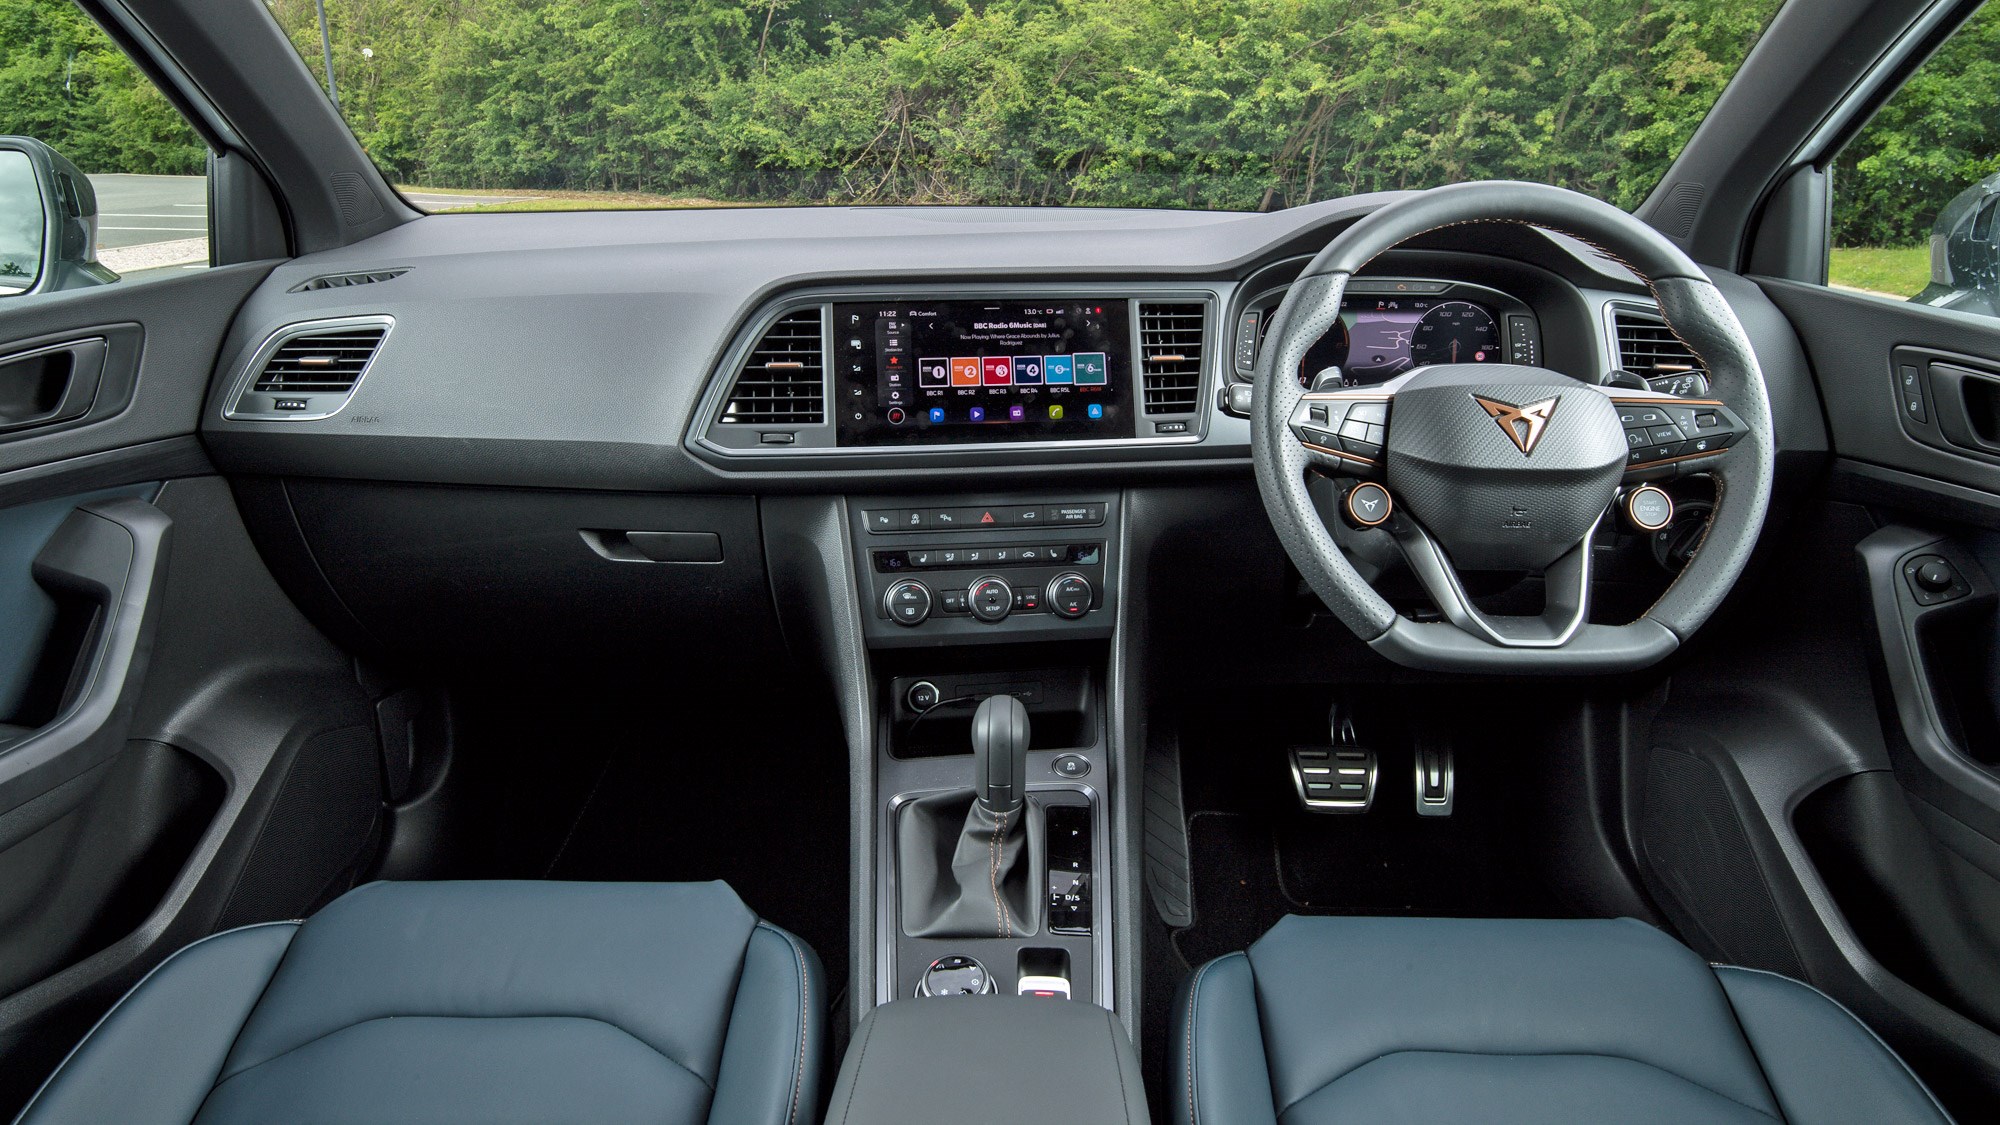 Cupra Ateca review - interior, dashboard, steering wheel, infotainment